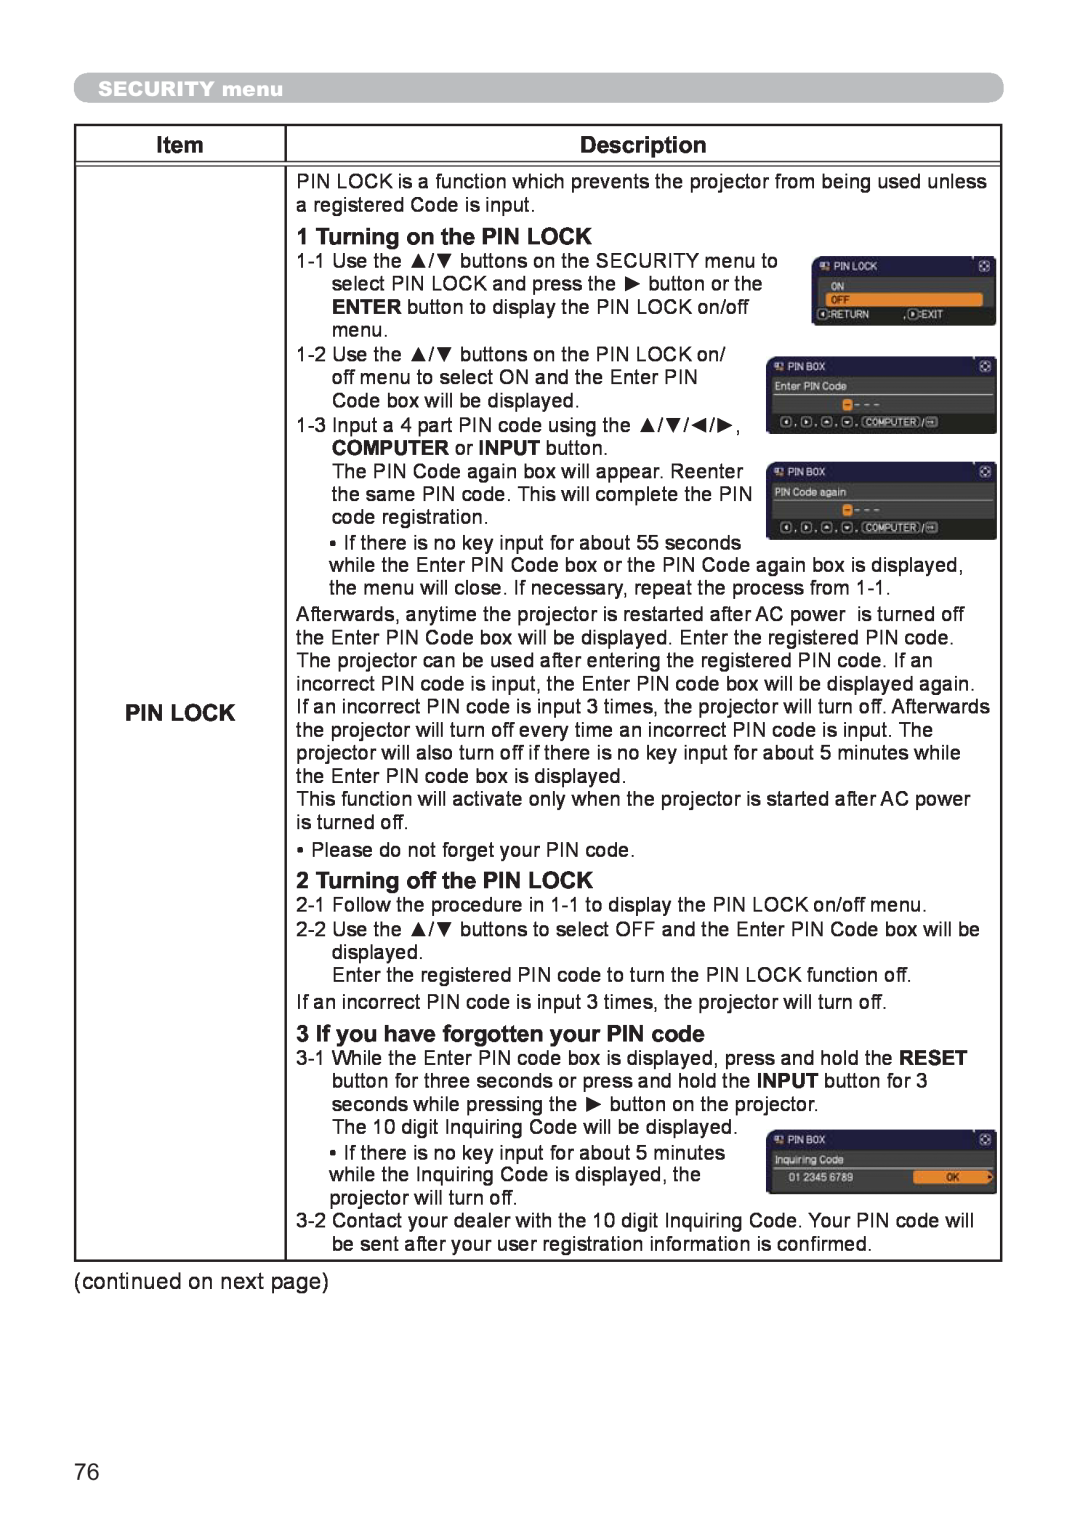 Hitachi CP-X2521WN Item, Description, Pin Lock, Turning on the PIN LOCK, Turning off the PIN LOCK, continued on next page 